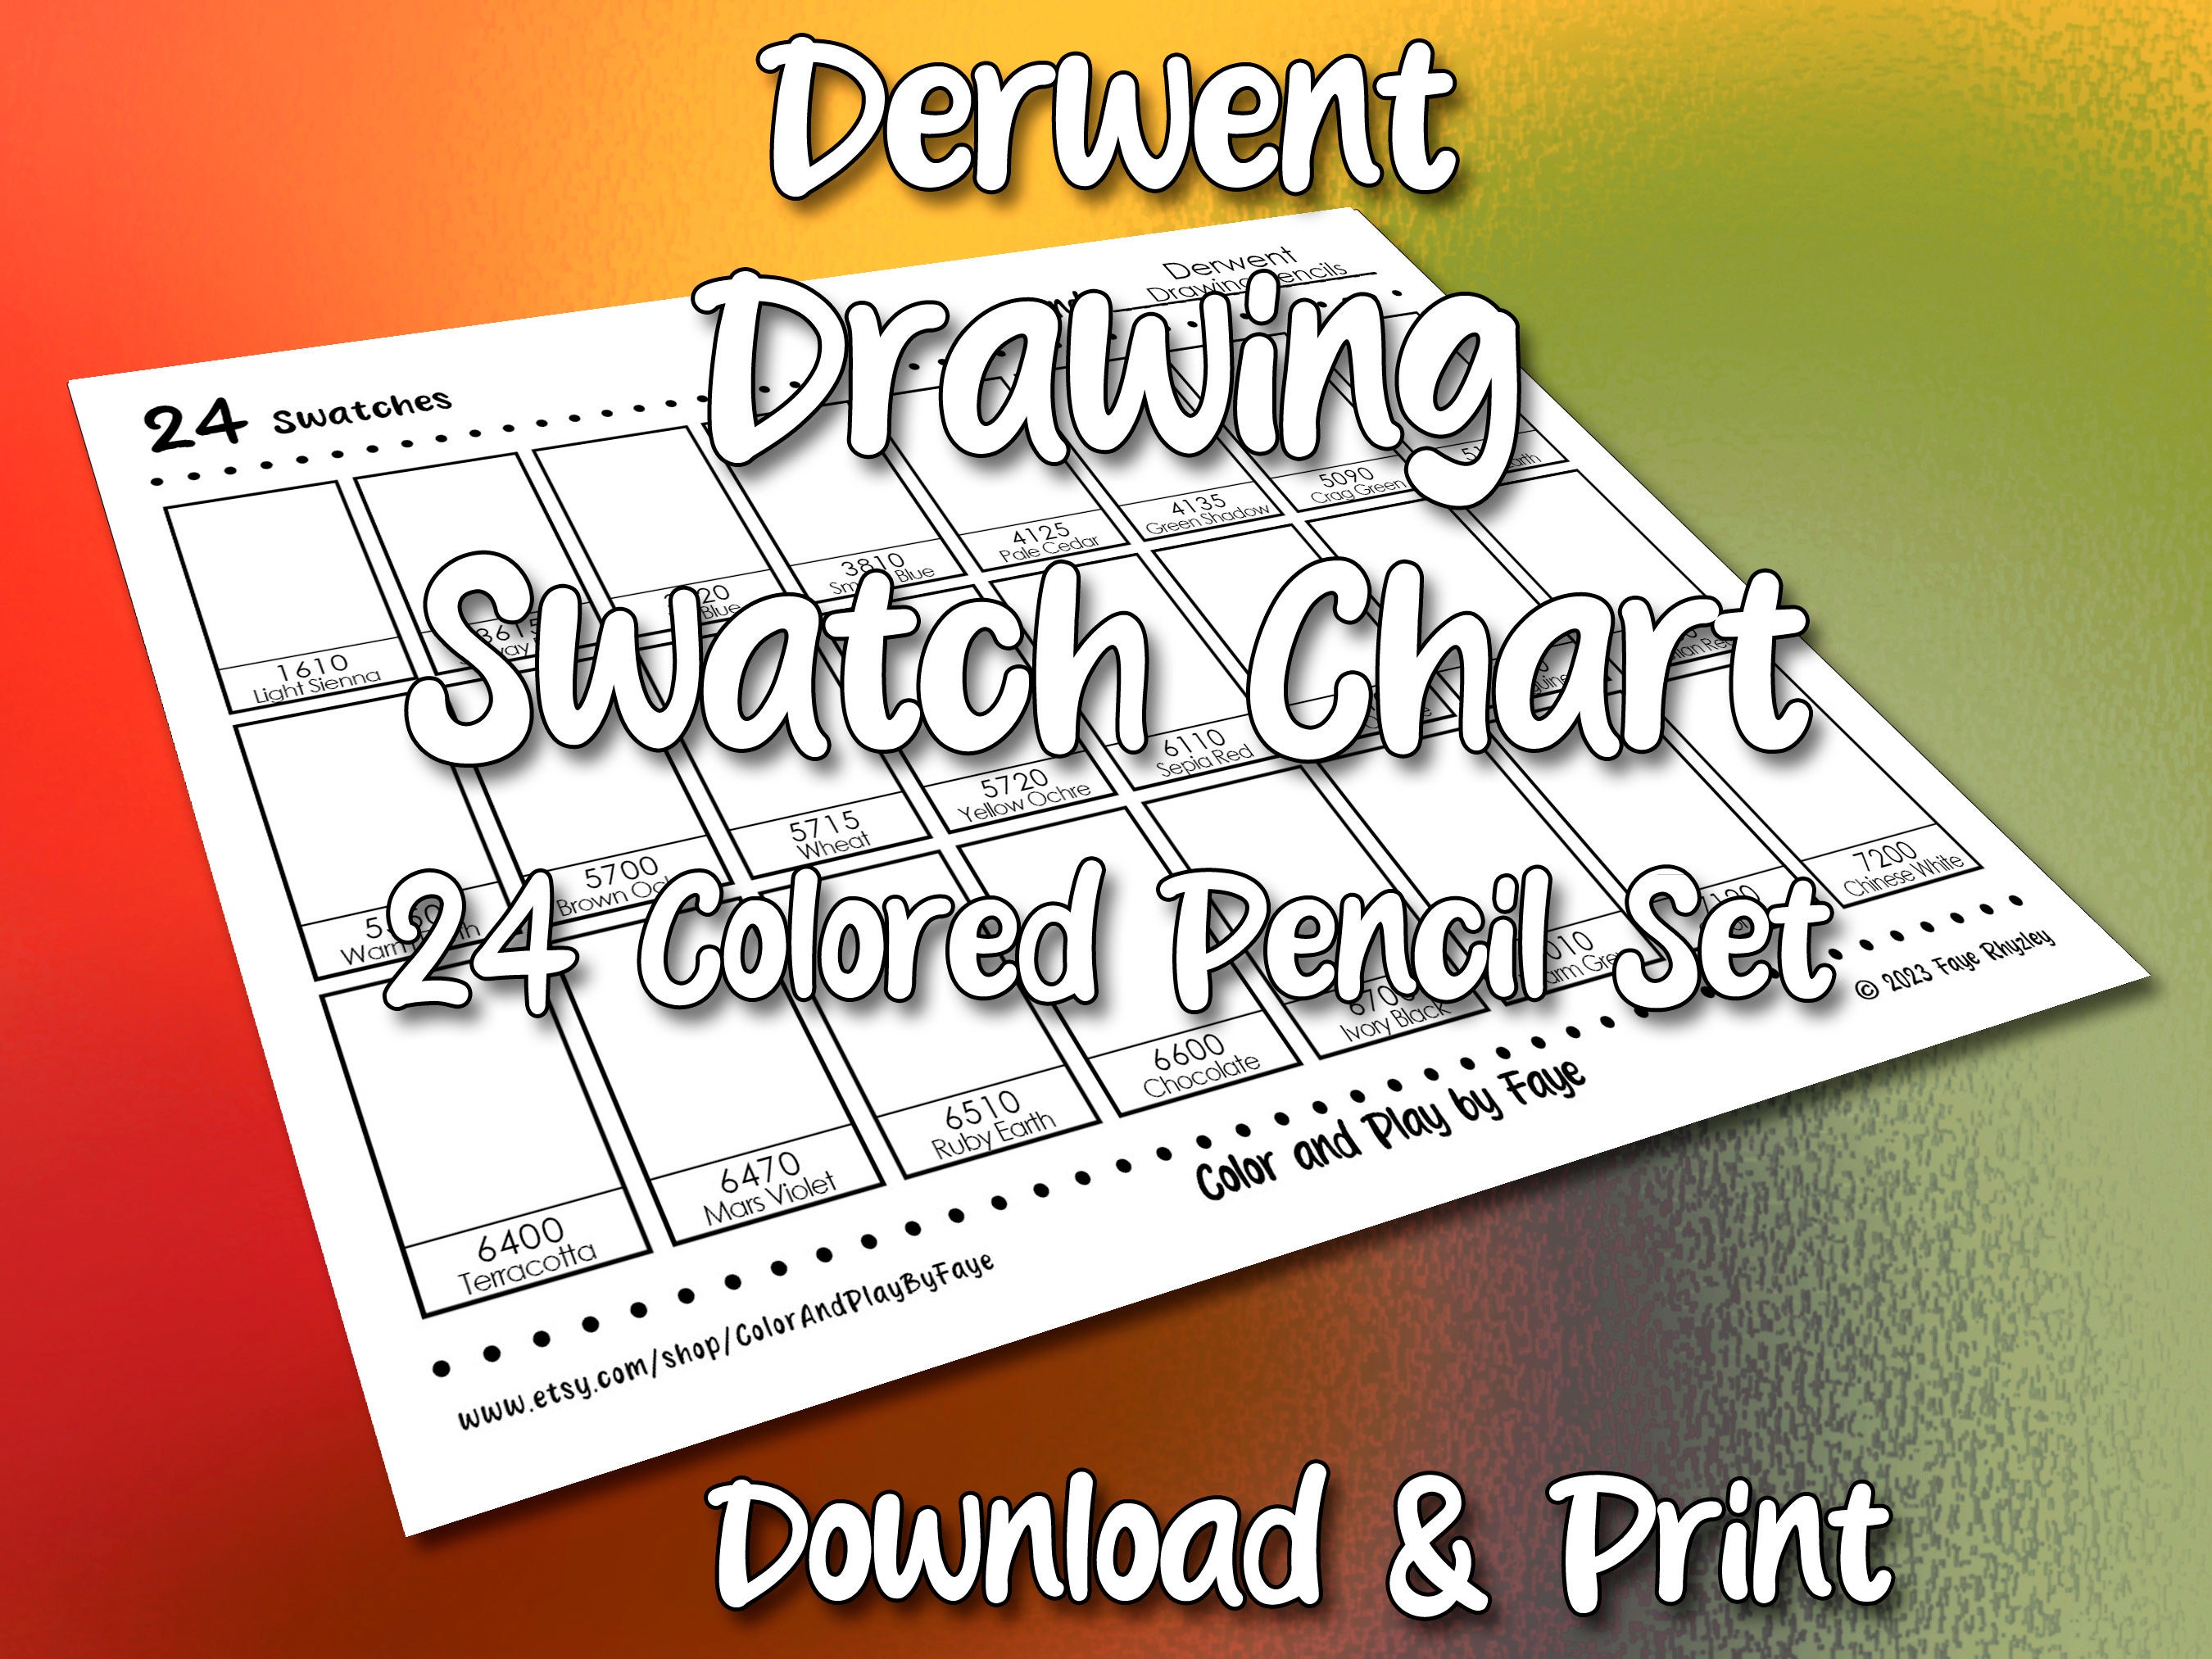 Swatch Form: Zenacolor Colored Pencils 120pc. -  Israel